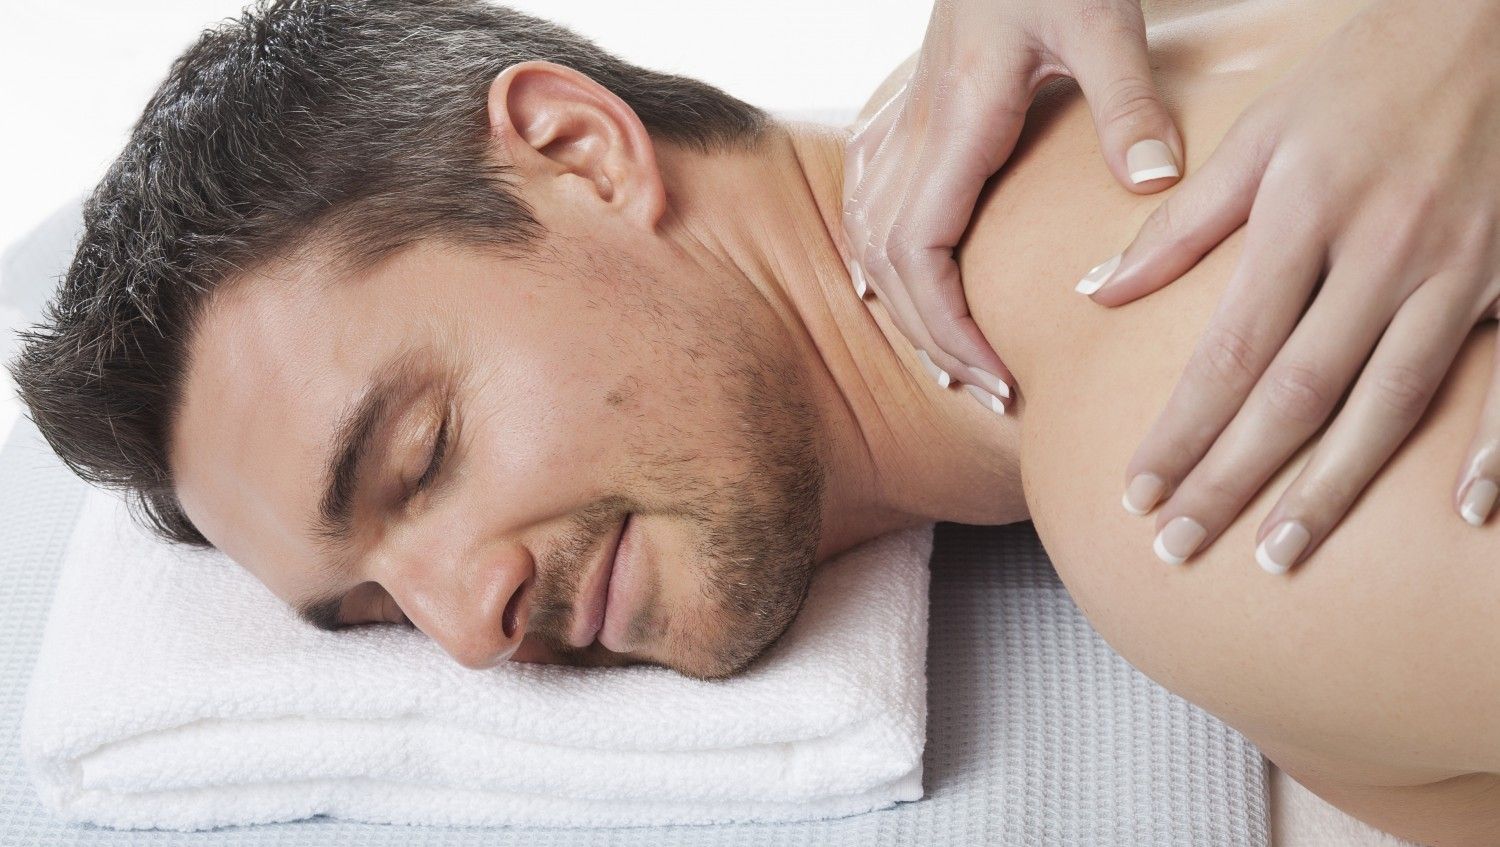 Male Massage Therapist Make Her Squirt